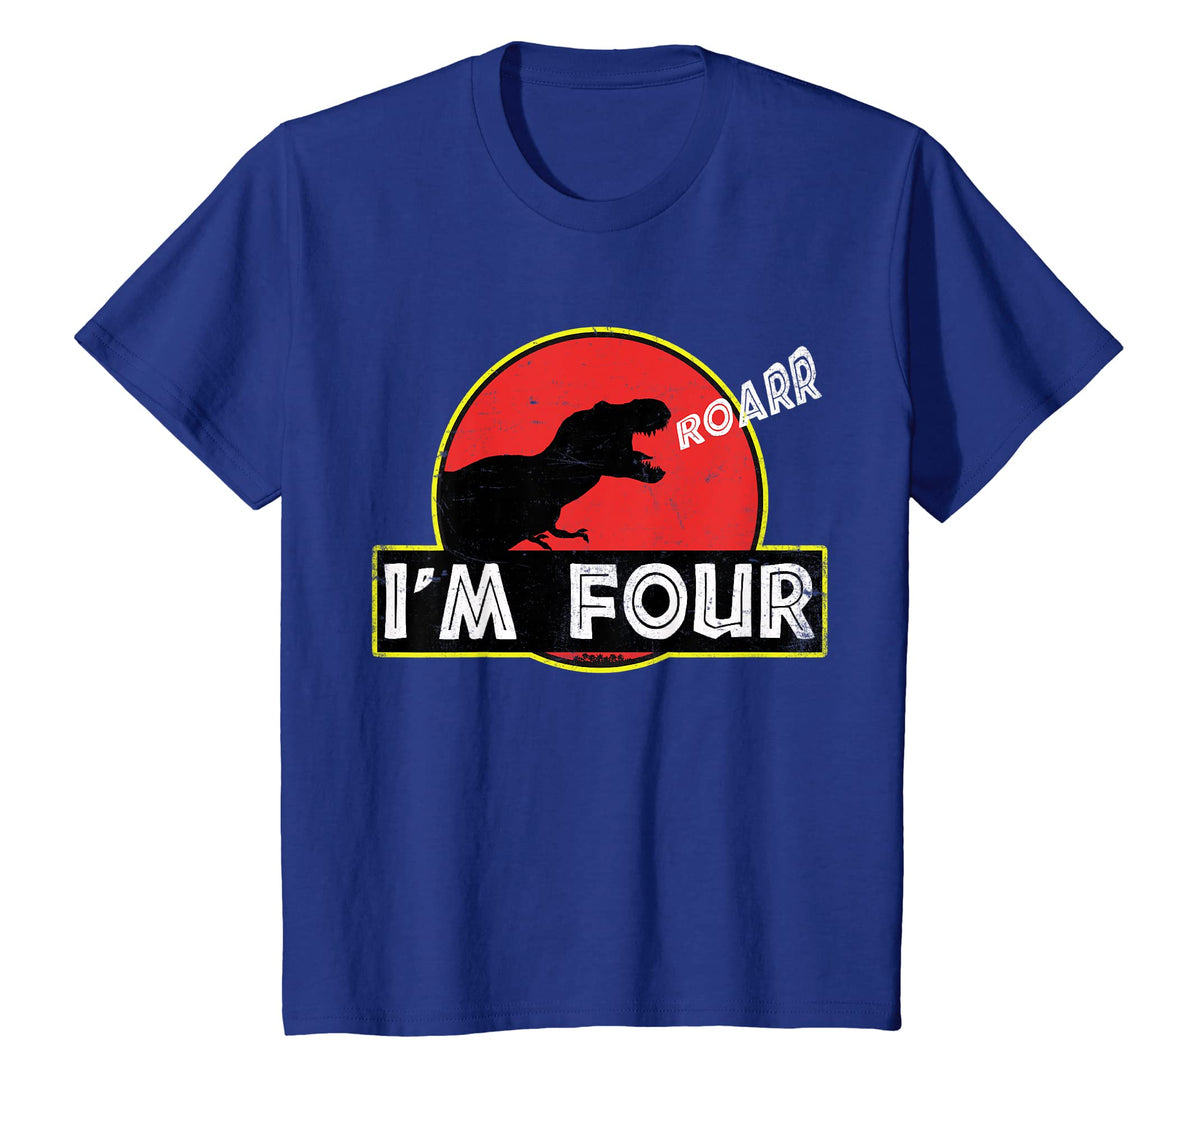 kids-kids-4-year-old-birthday-gift-shirt-roar-i-m-four-dinosaur-new